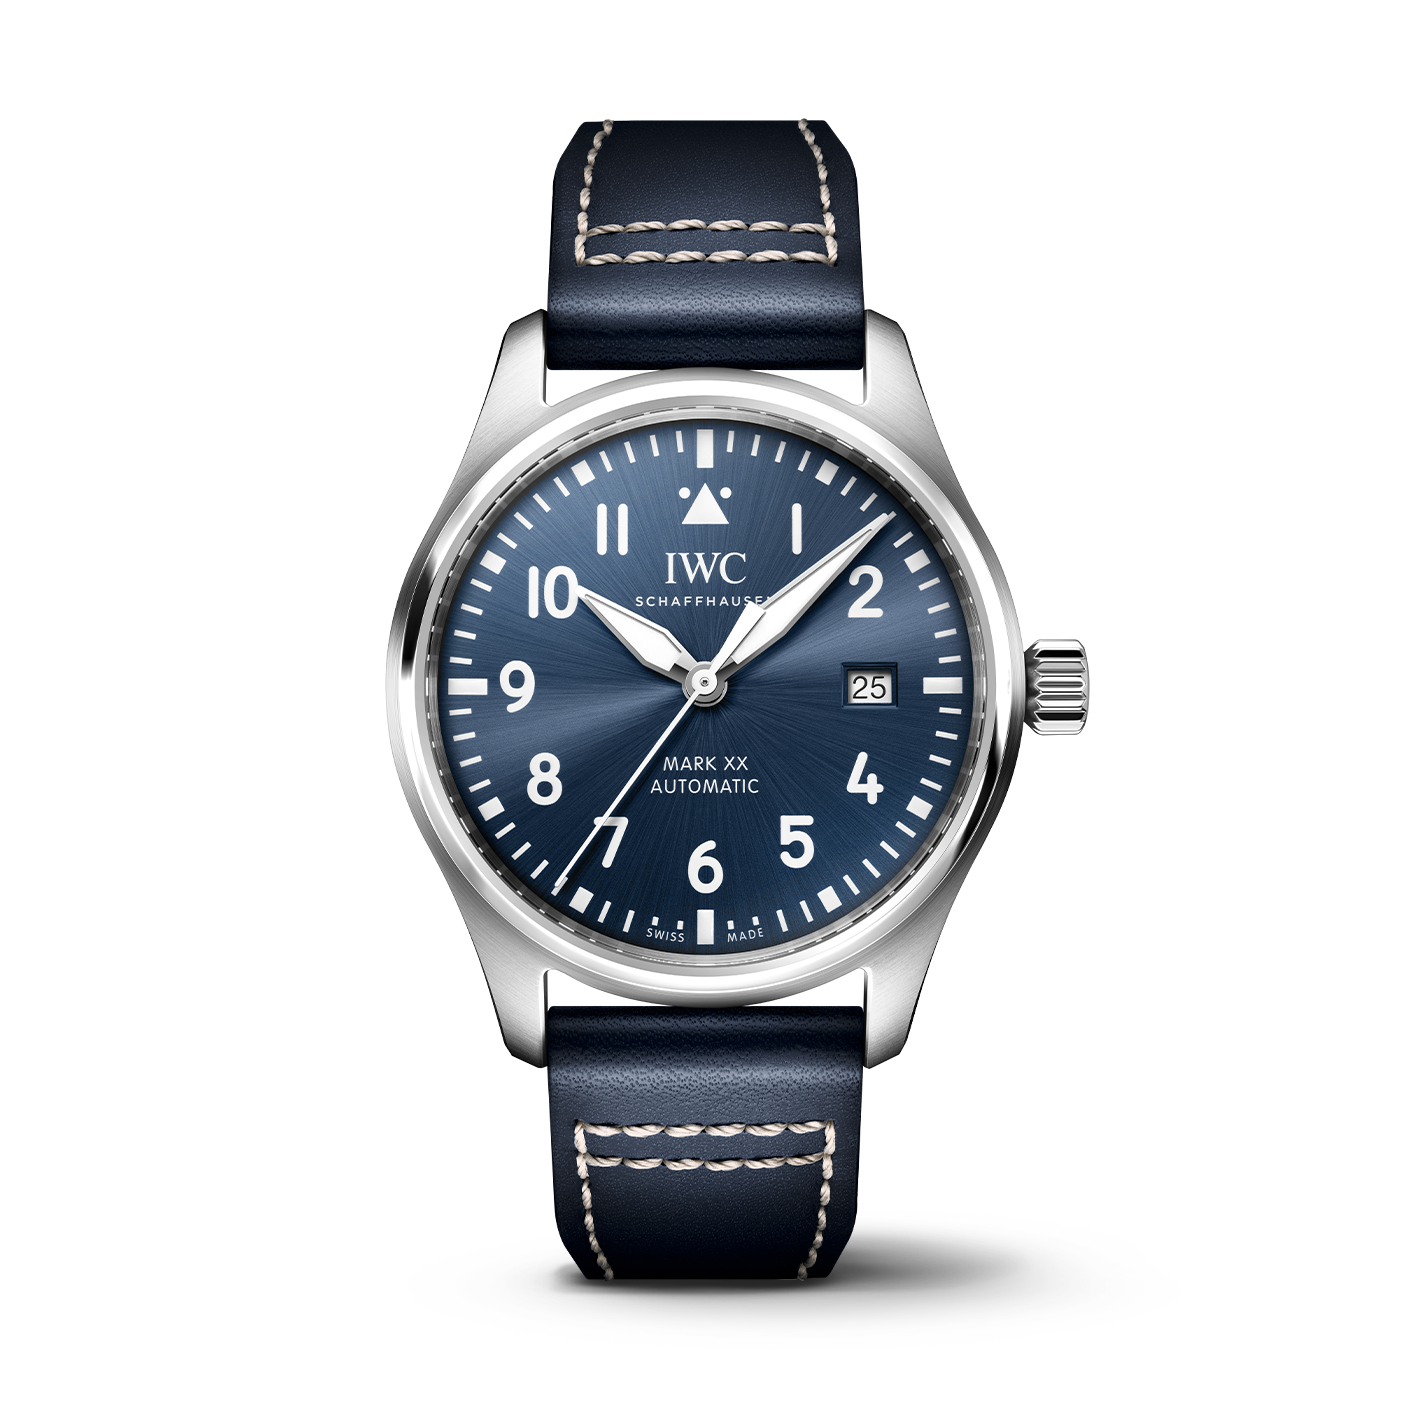 Pilot's Watches Mark XX 1